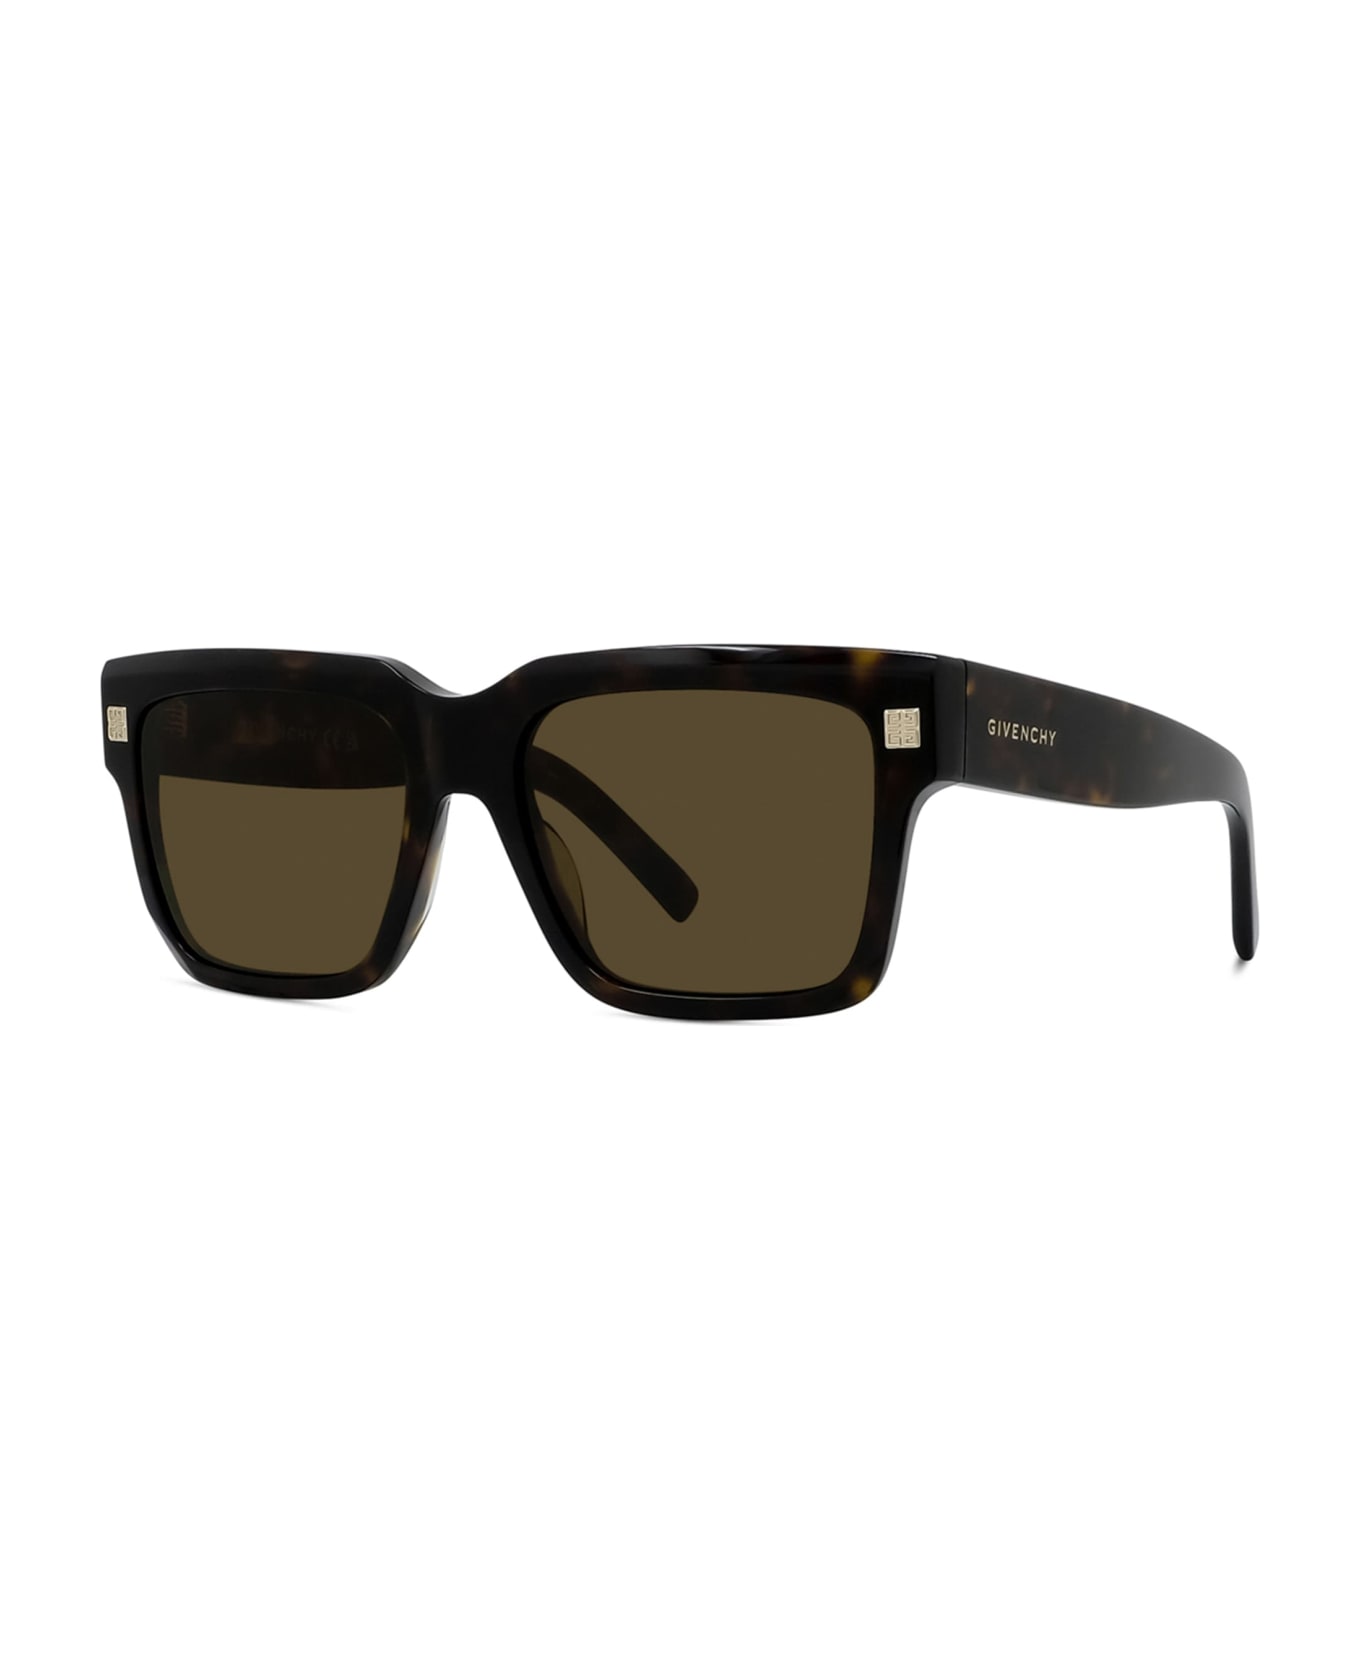 Givenchy Eyewear Gv40060i - Dark Havana Sunglasses - Havana